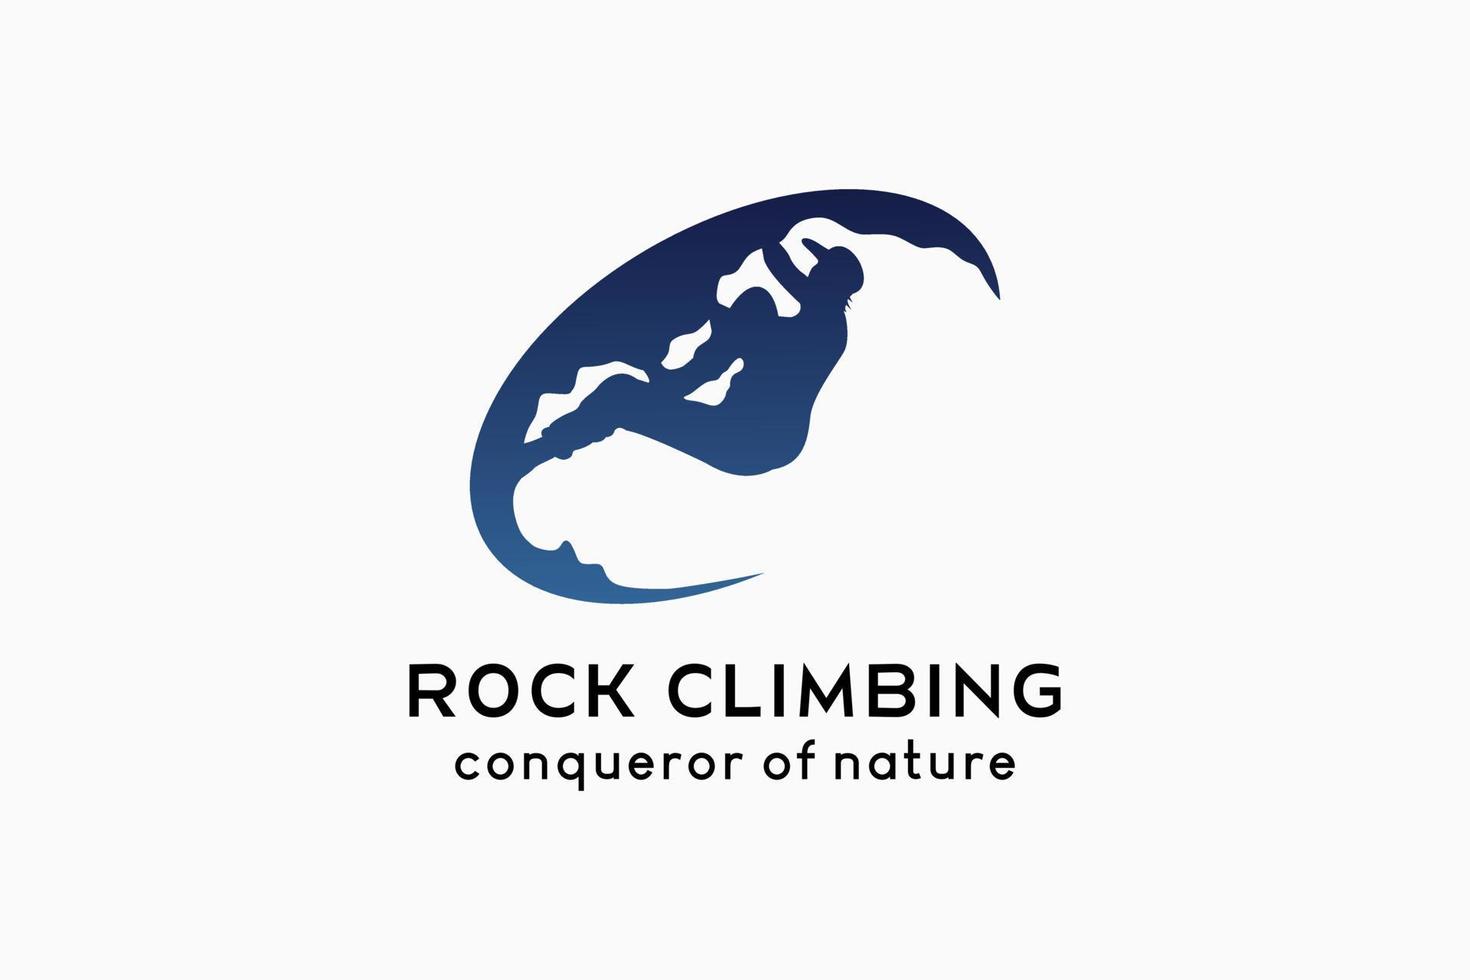 rots beklimming logo ontwerp, silhouet van mensen beklimming rots in ovaal vector